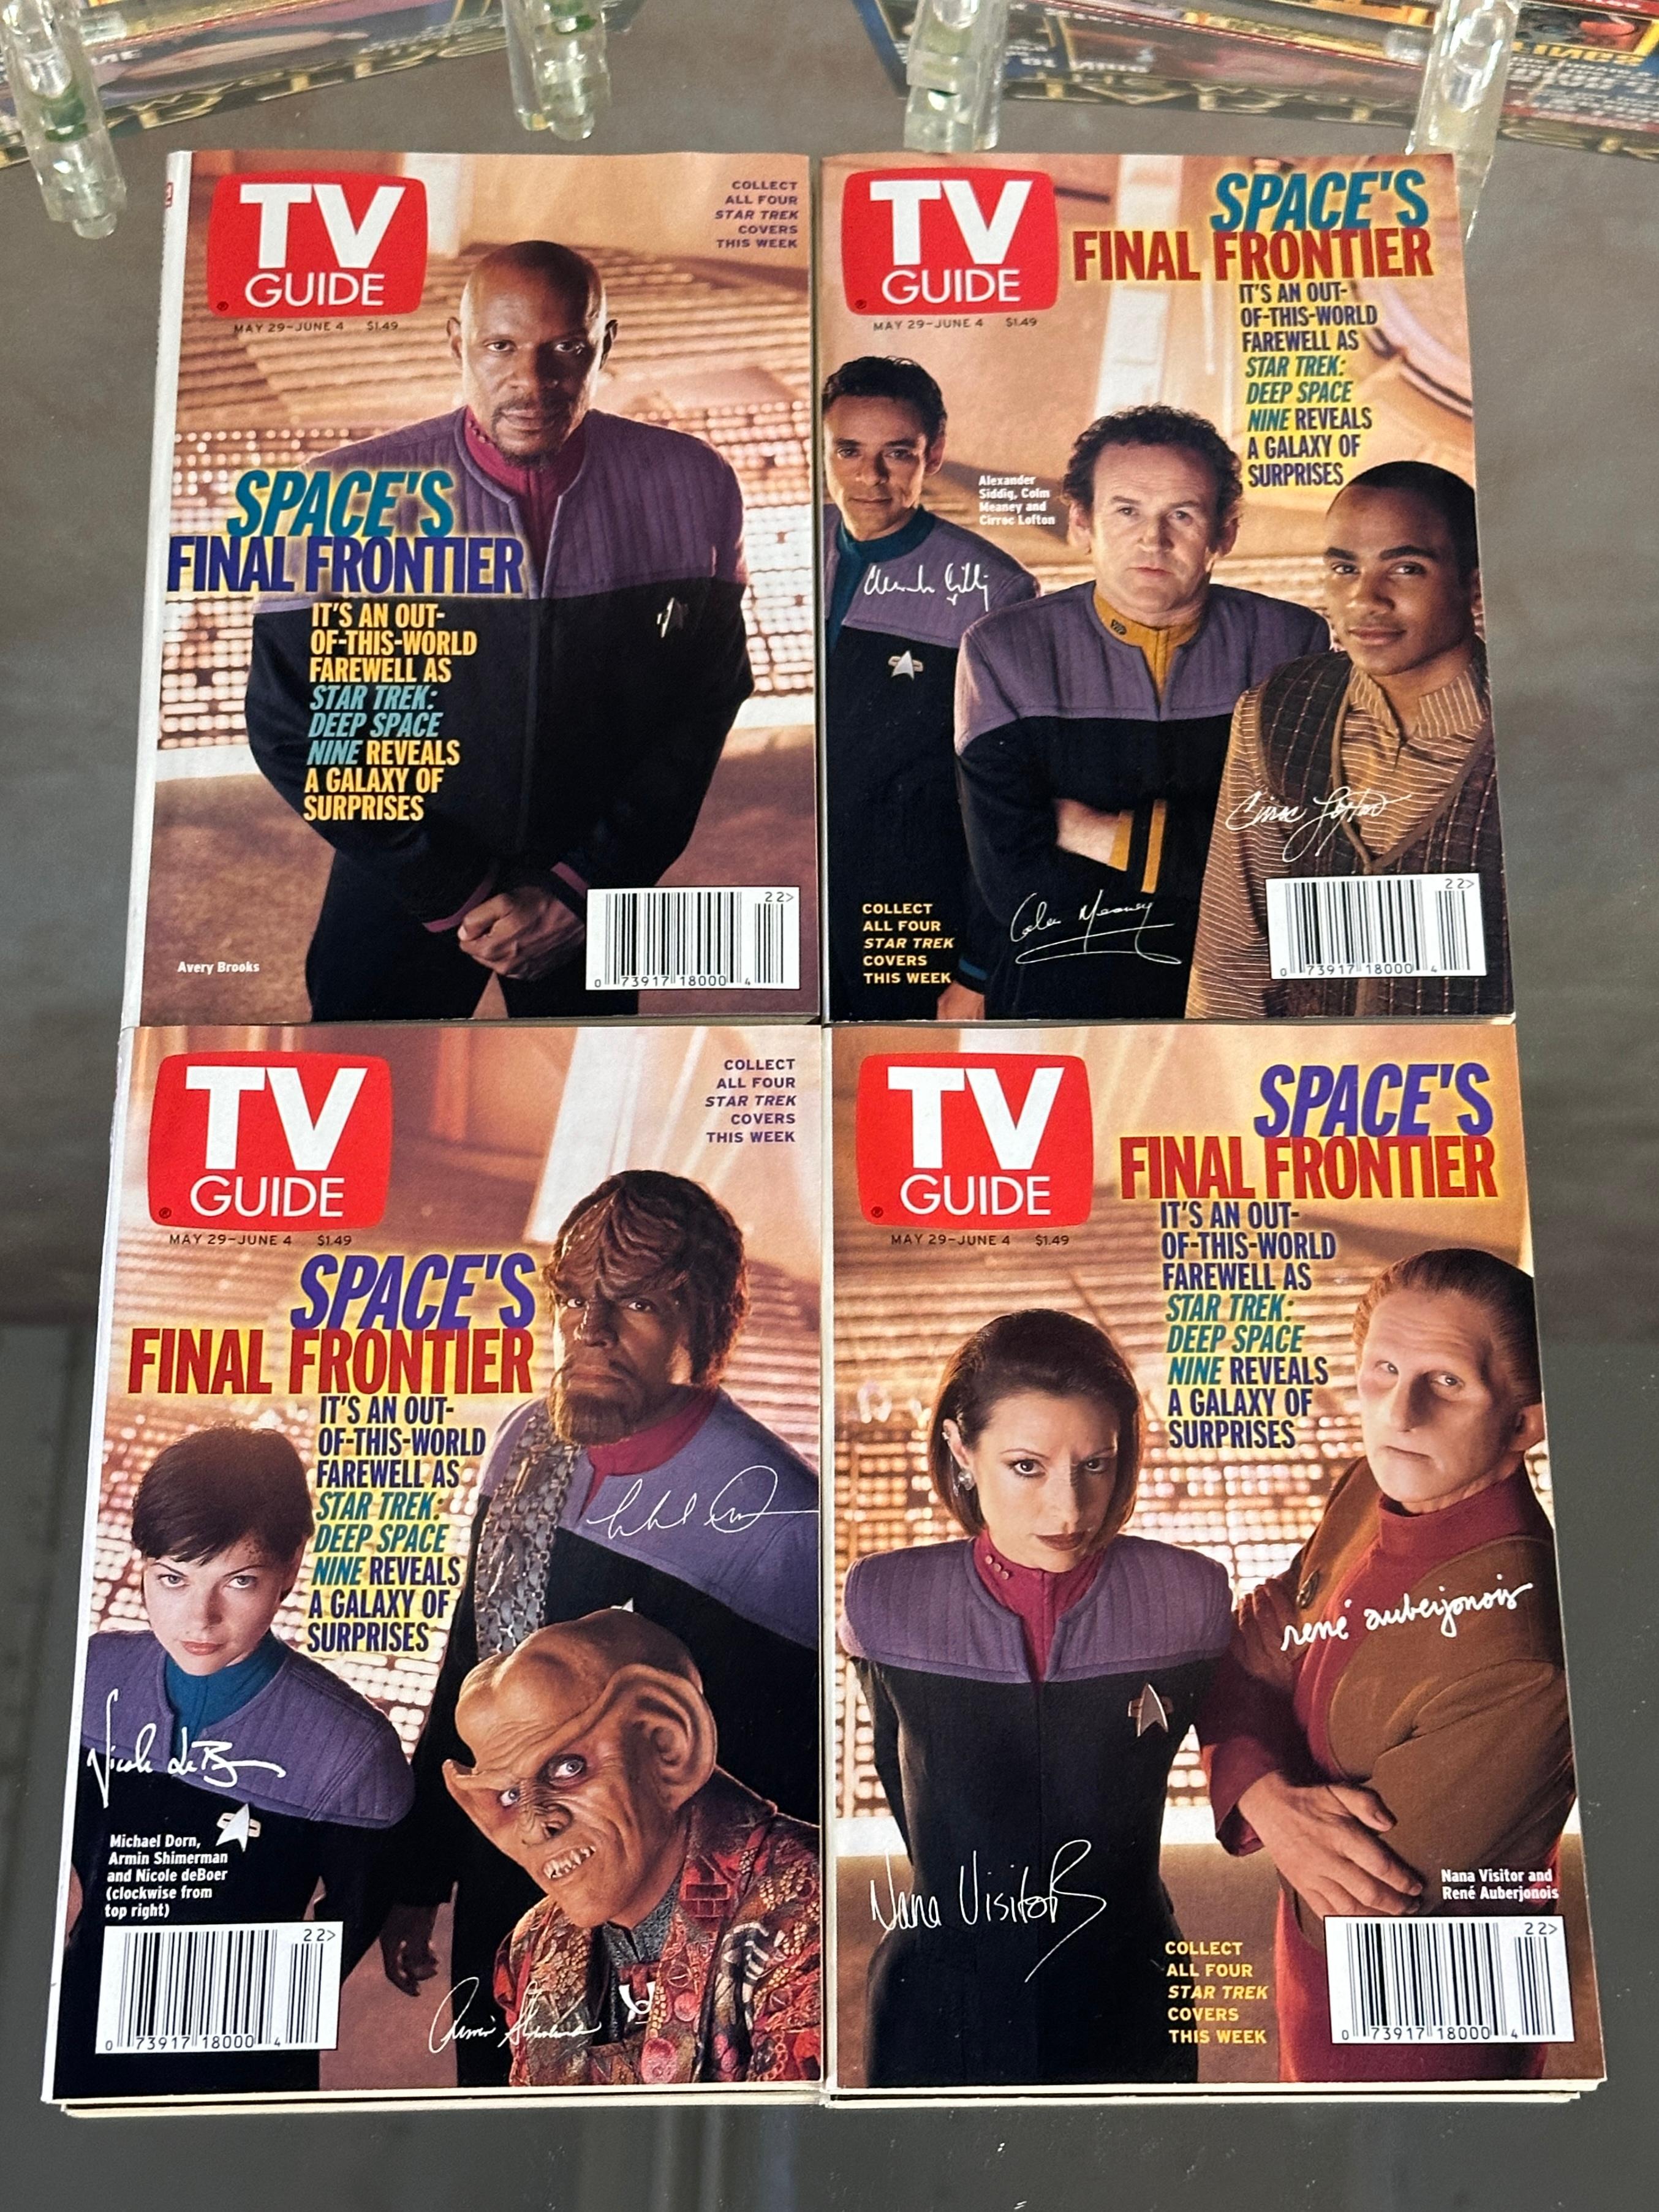 Assorted Star Trek Memorabilia